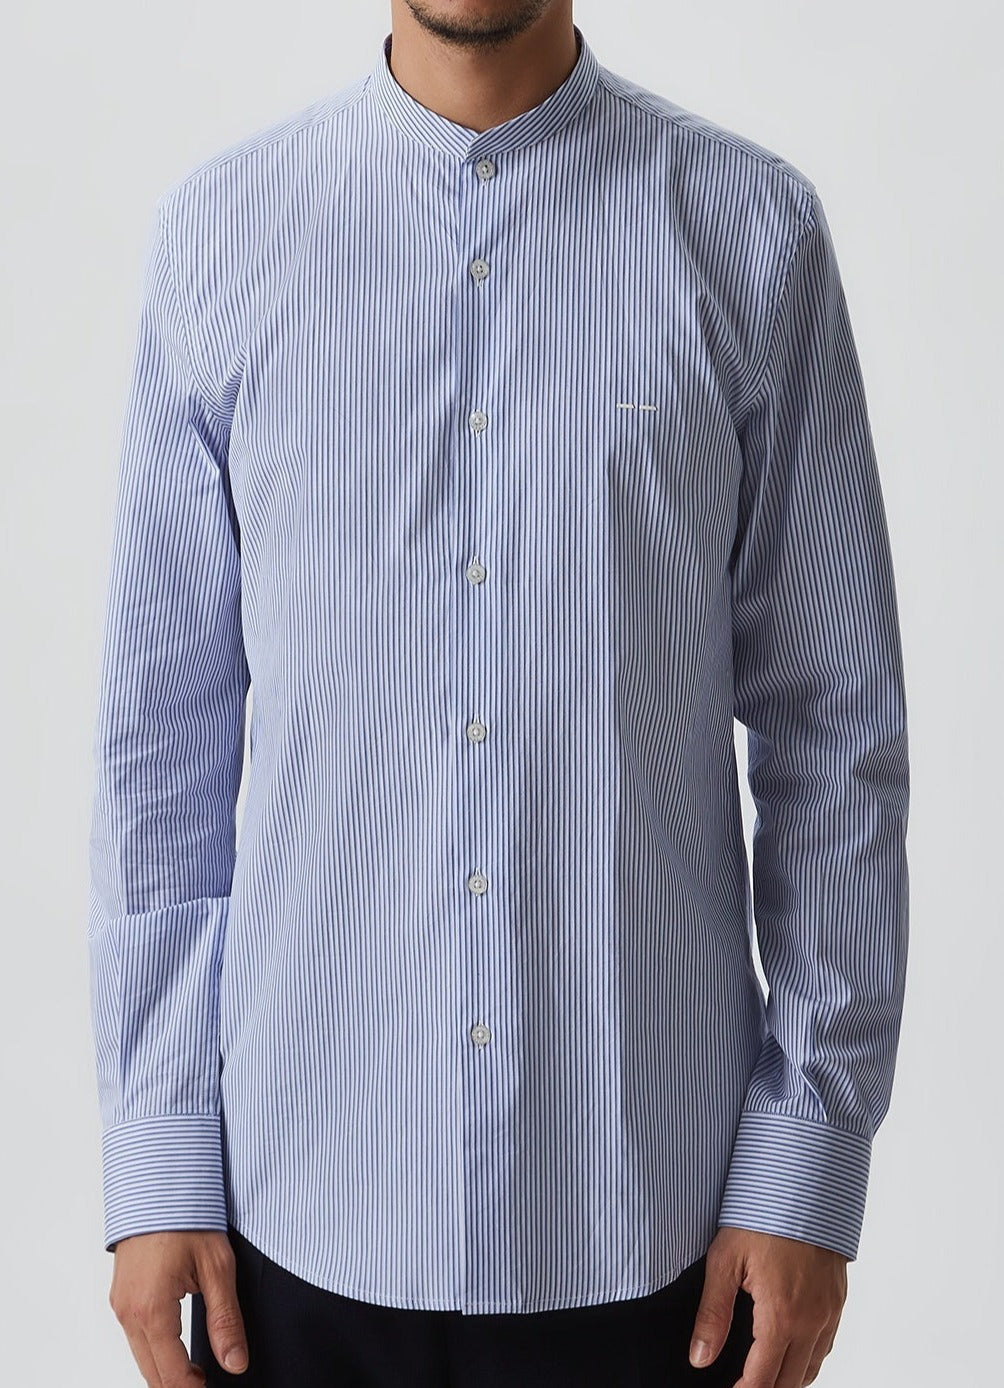 Men Shirt | Slim Fit Shirt With Stand Collar by Spanish designer Adolfo Dominguez